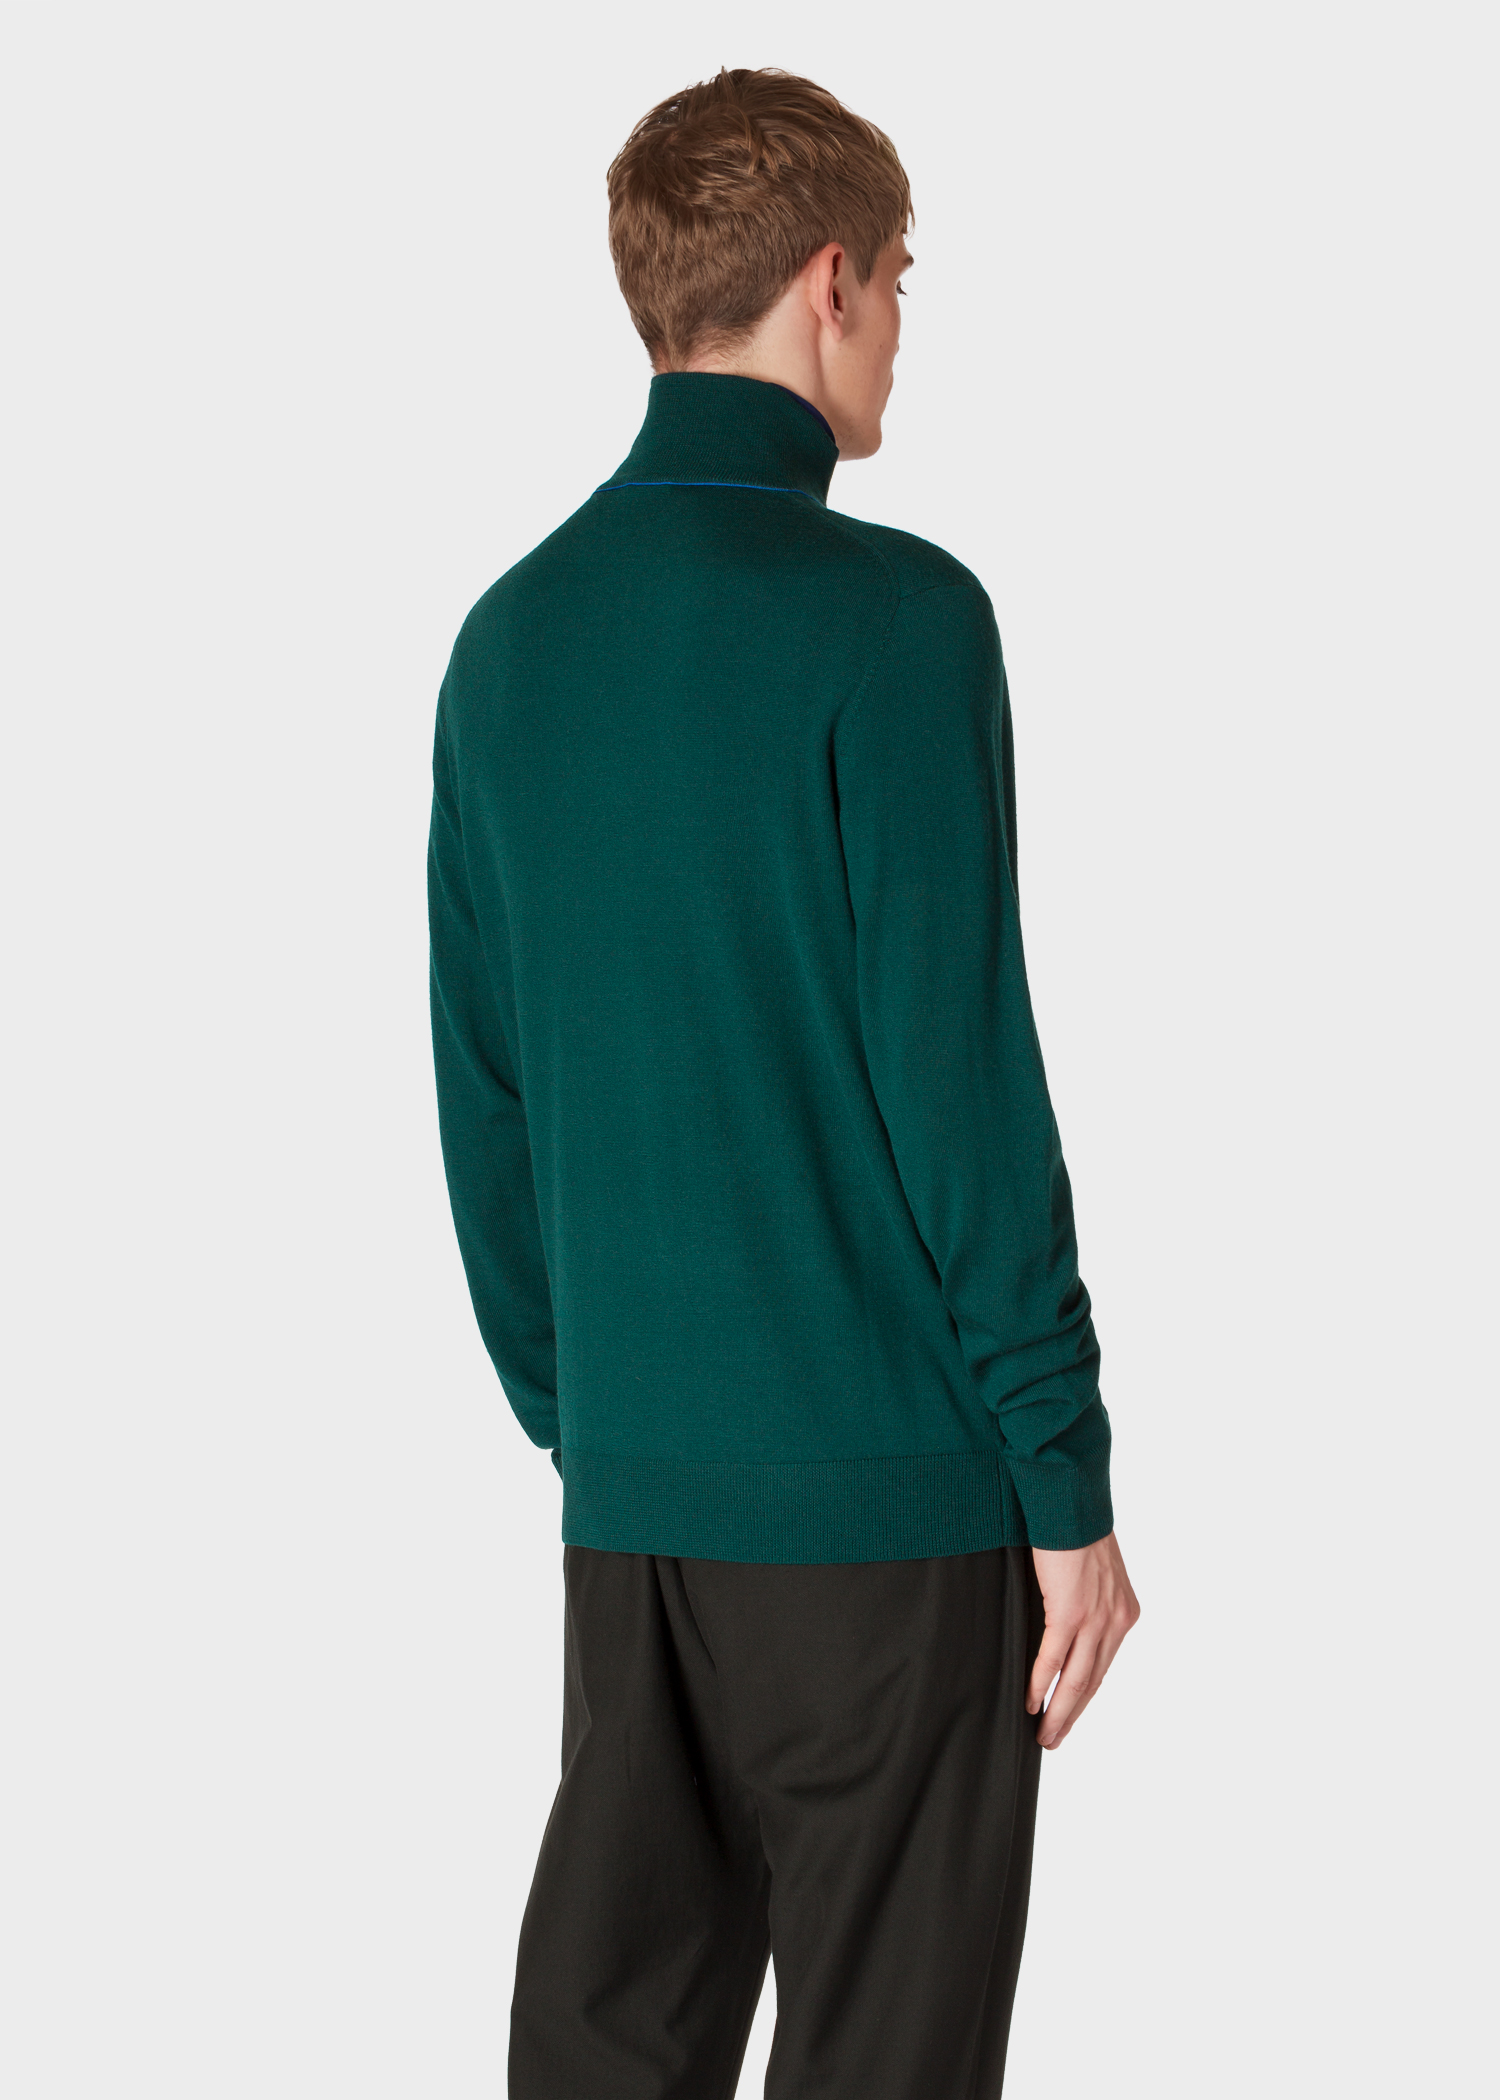 Model back close up - Men's Dark Green Half-Zip Merino Wool Sweater Paul Smith